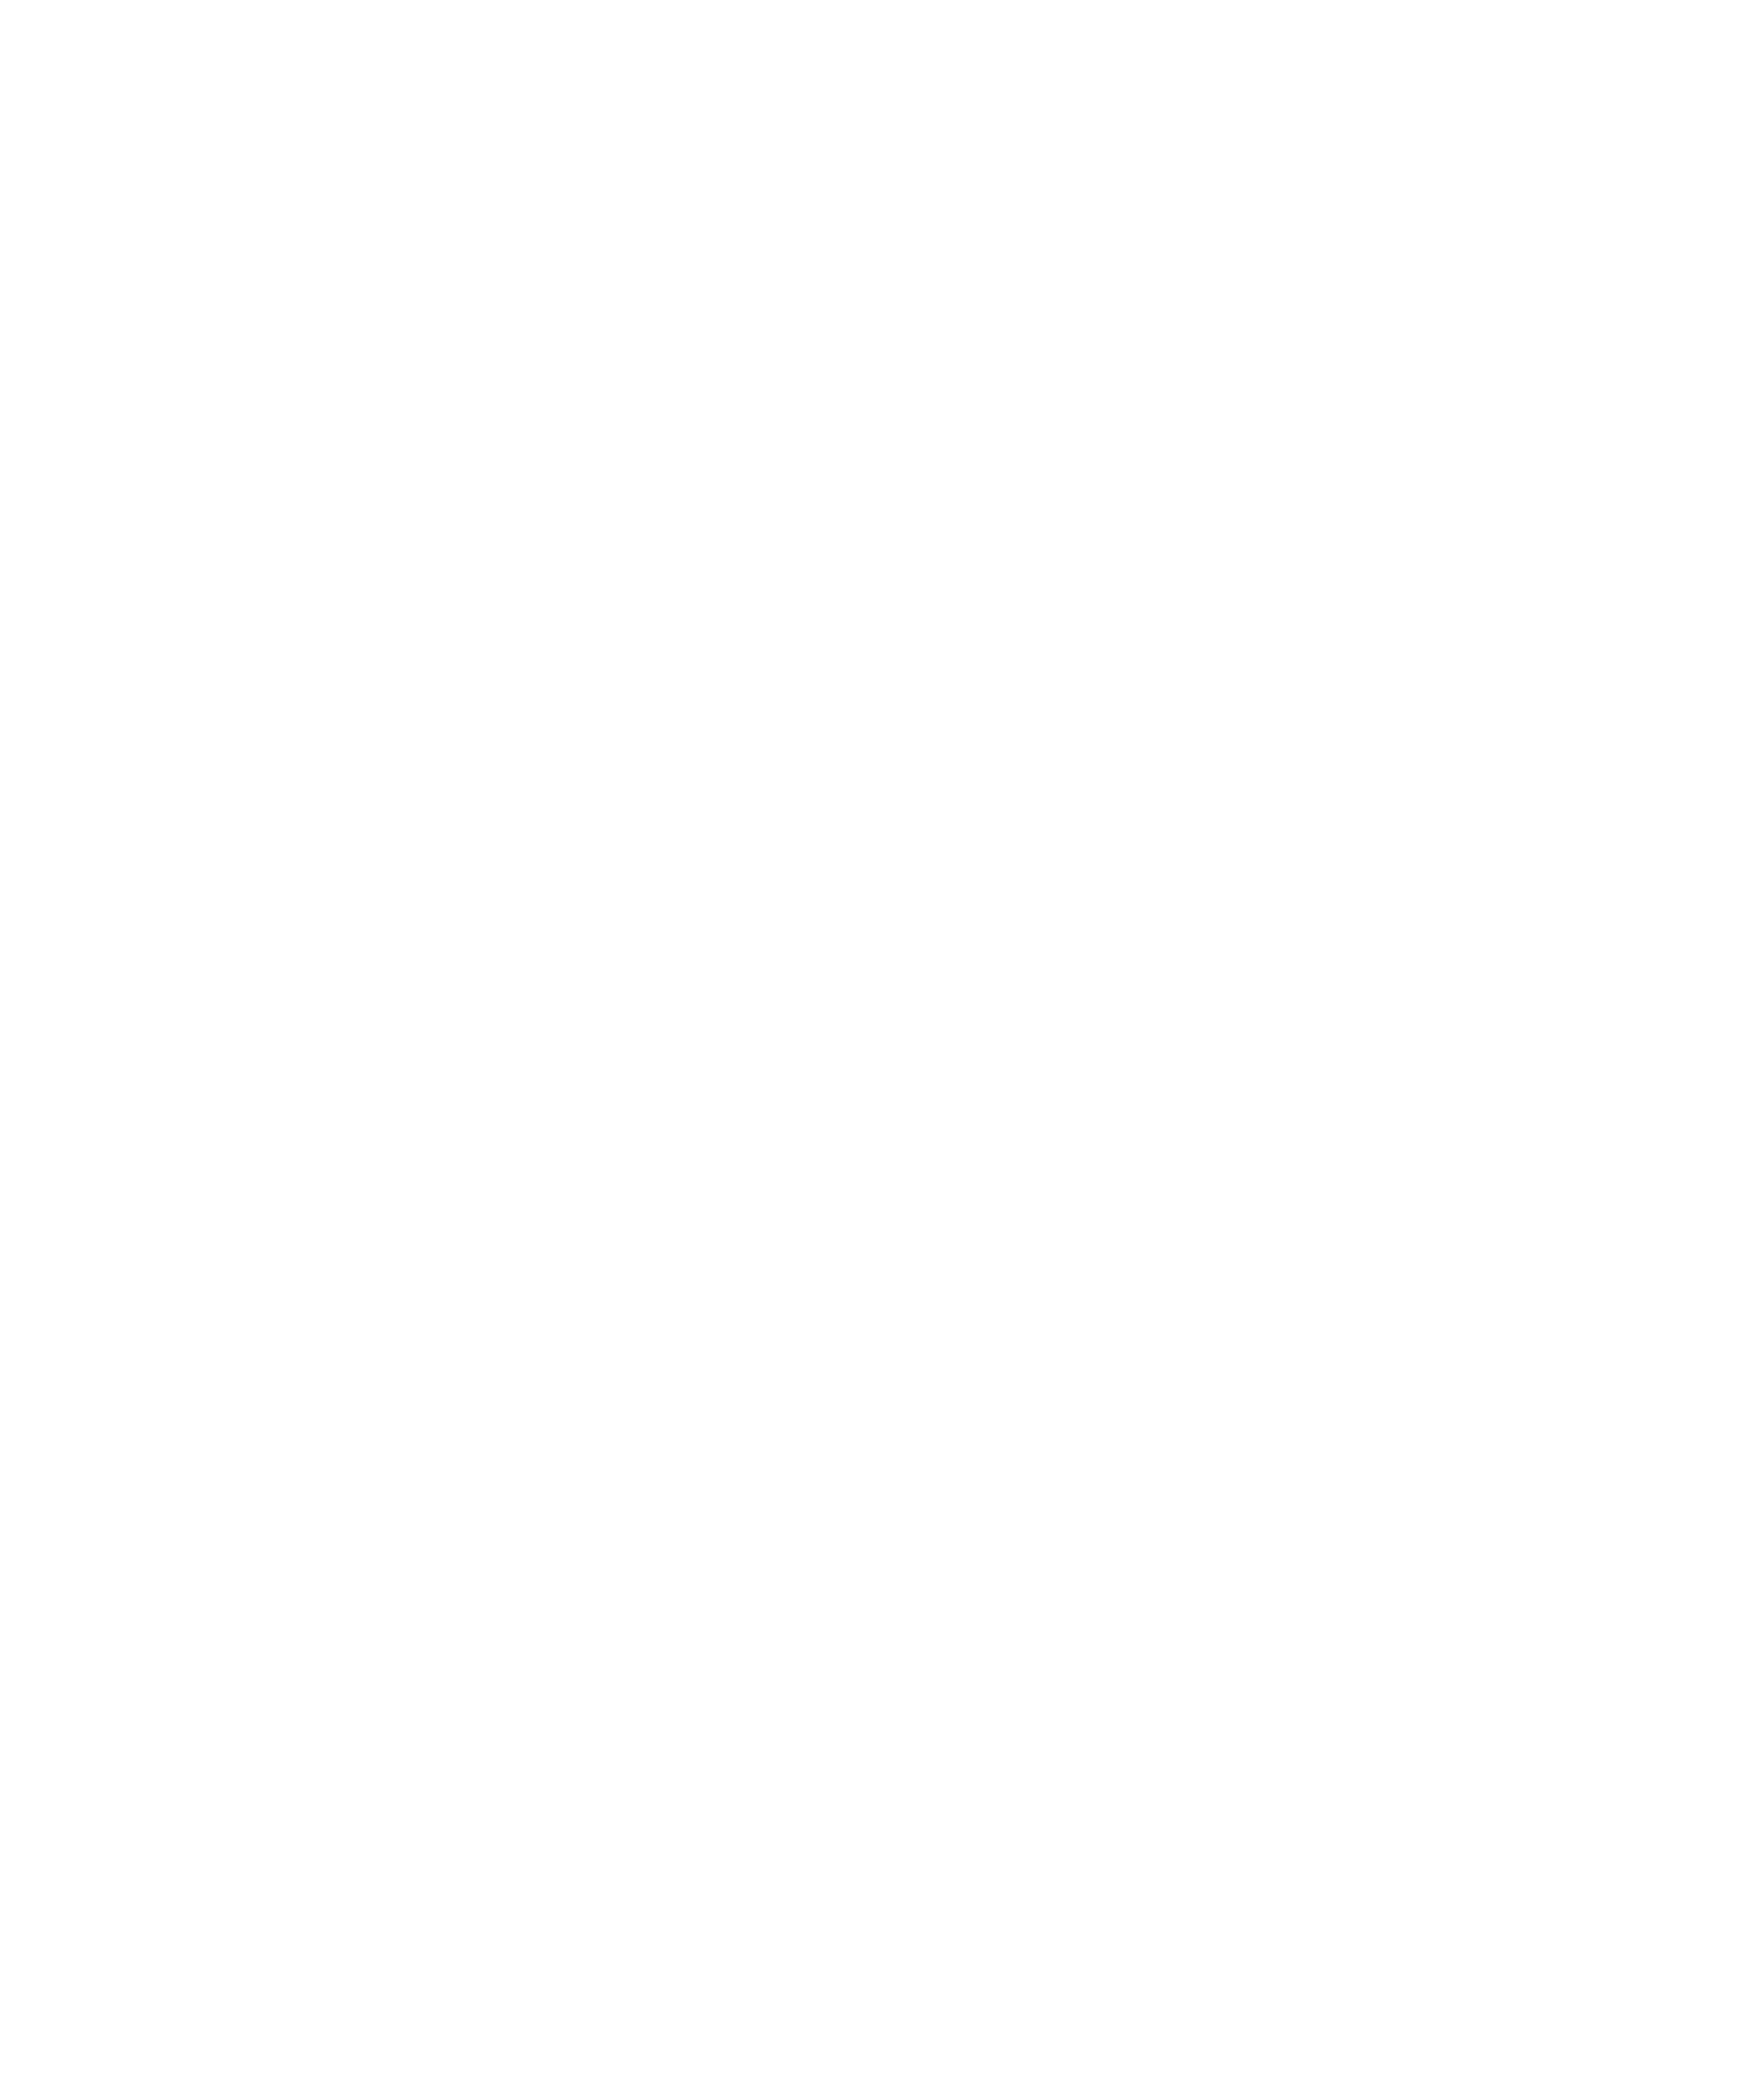 Design Circle